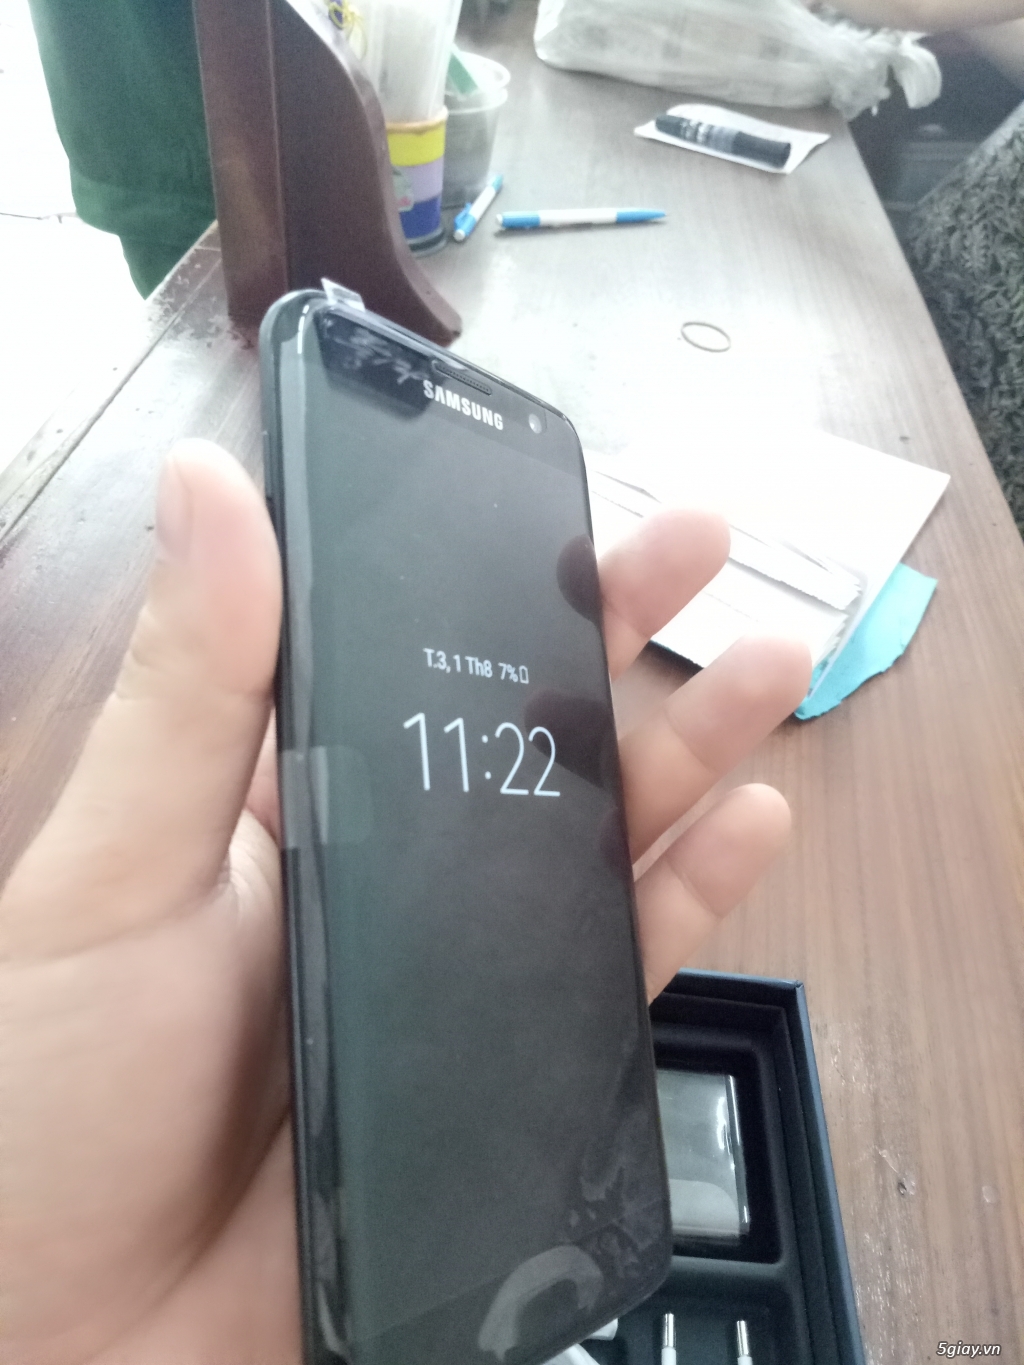 Bán Samsung Galaxy S7 Edge Black Pearl 128GB Full box chưa sờ tay - 2